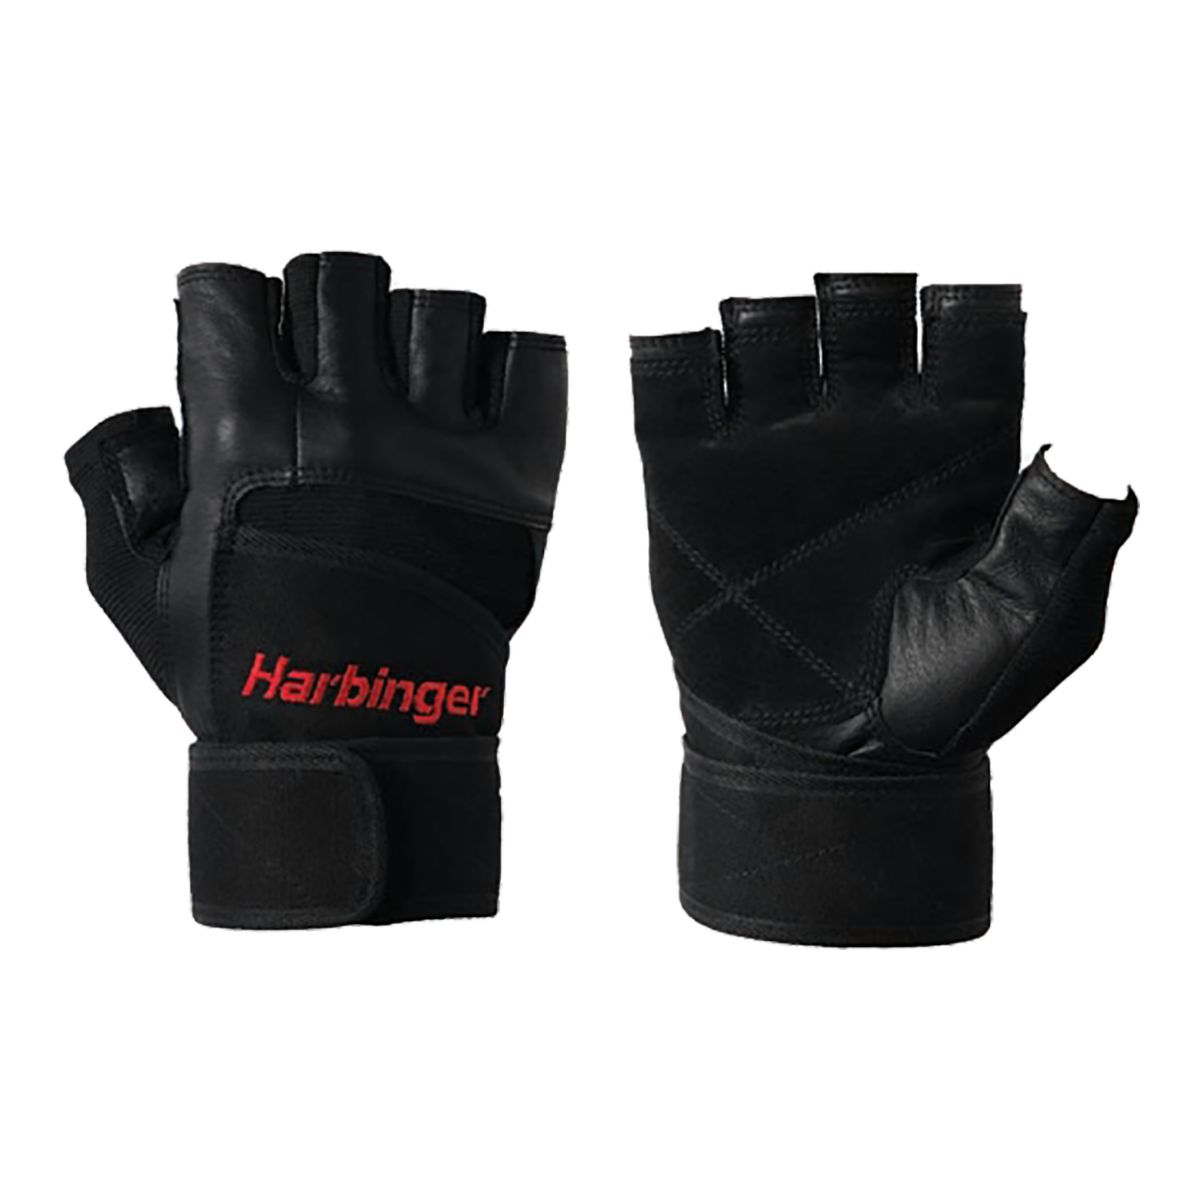 Image of Harbinger Pro Wrist wrap Glove 16